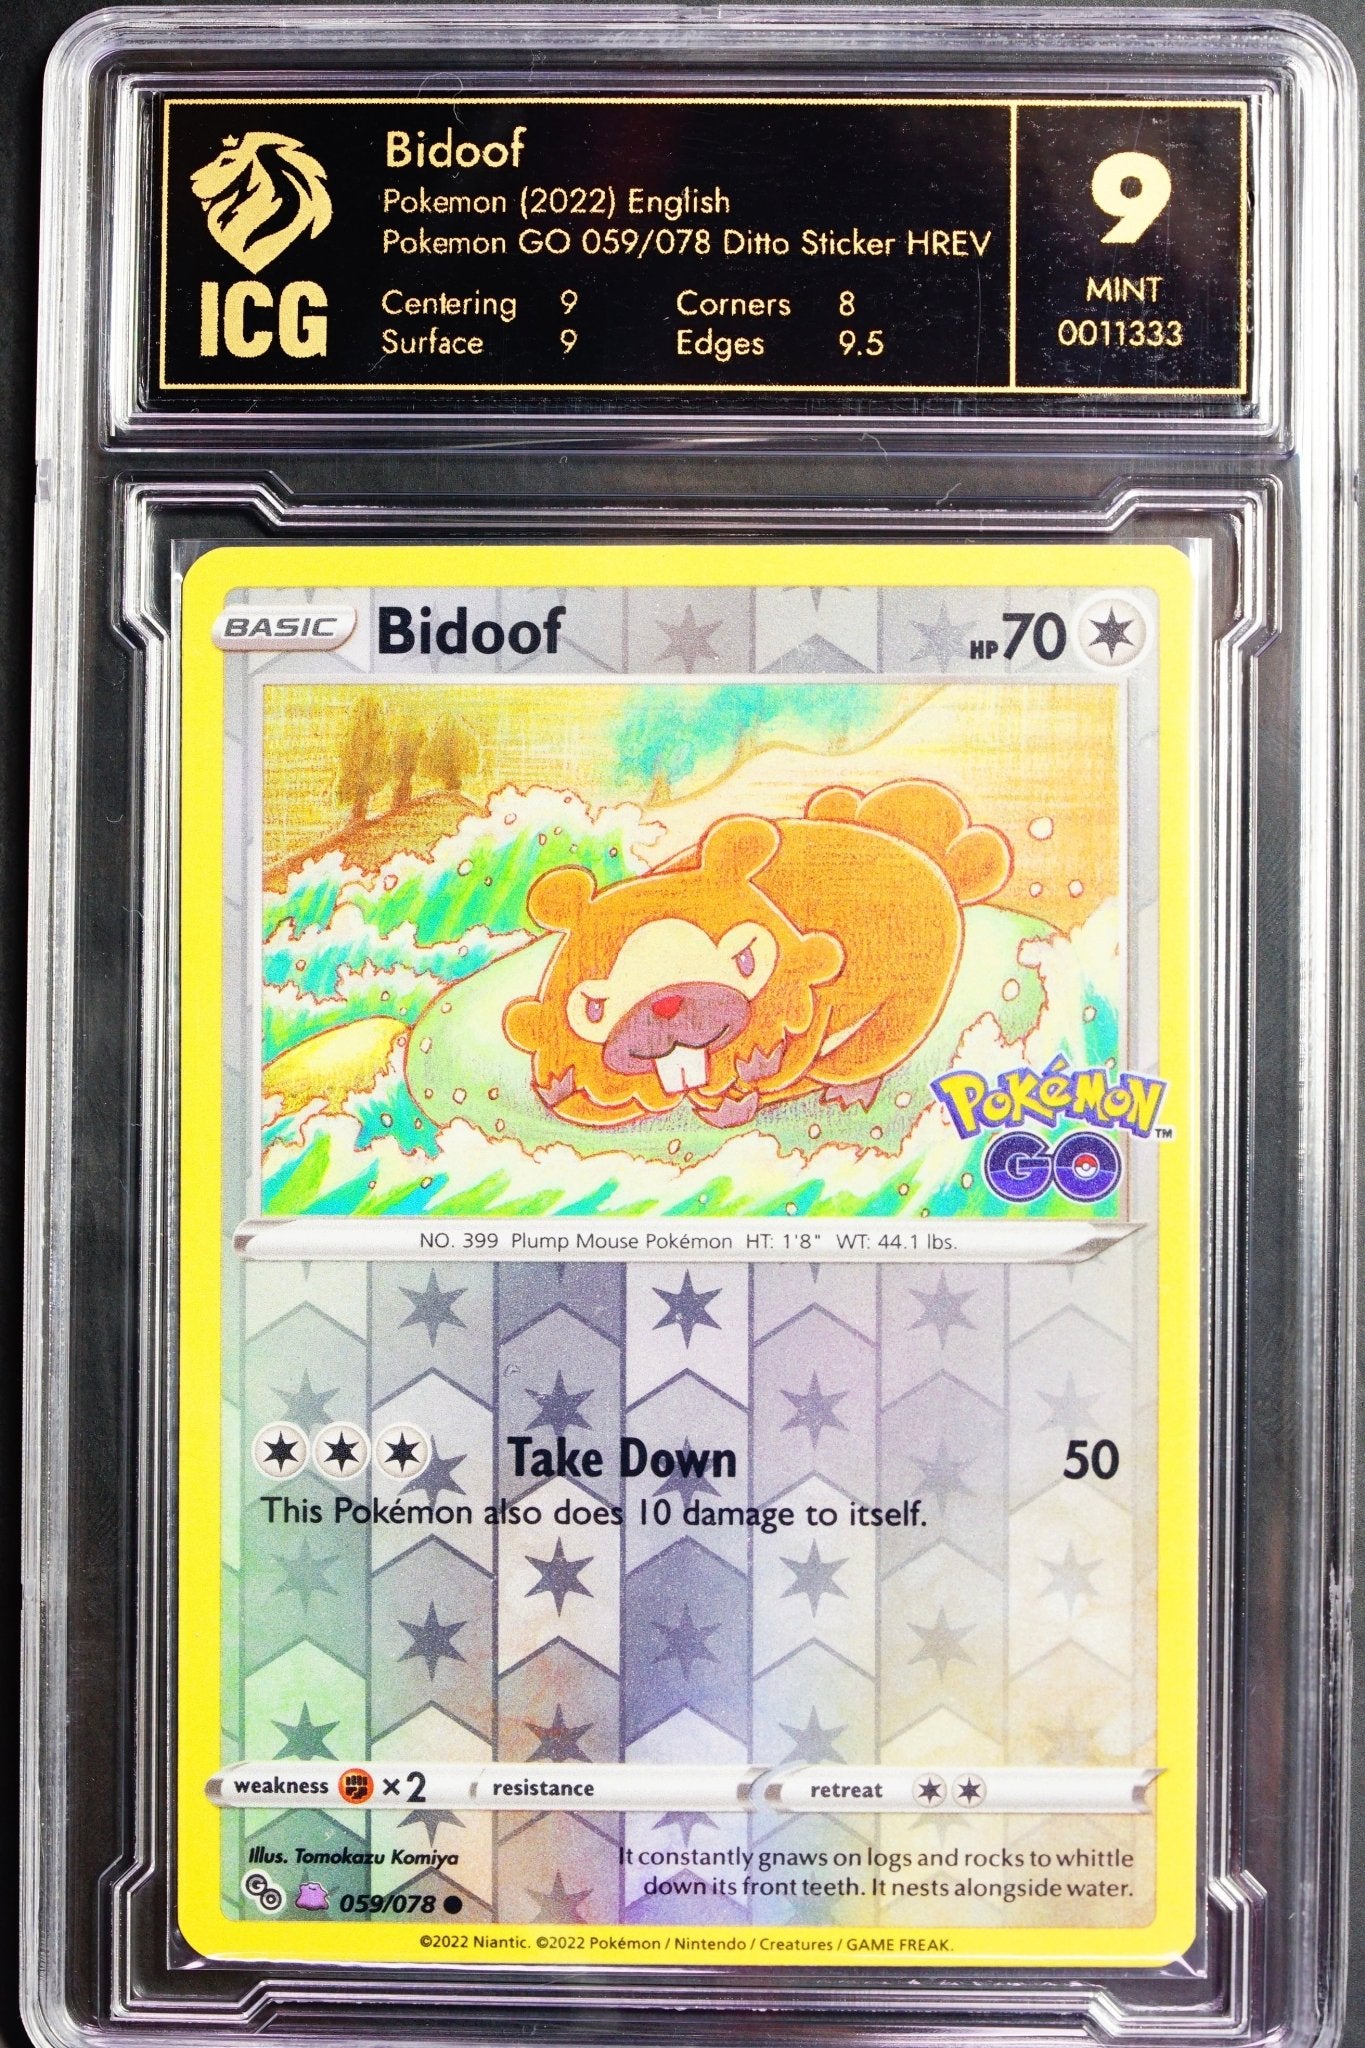 Bidoof Rev. Holo 059/078 - Dittio Sticker card ICG 9 (PSA) - Pokemon Go - Pokemon Card - THE CARD SPOT PTY LTD.Pokemon GradedPokémon